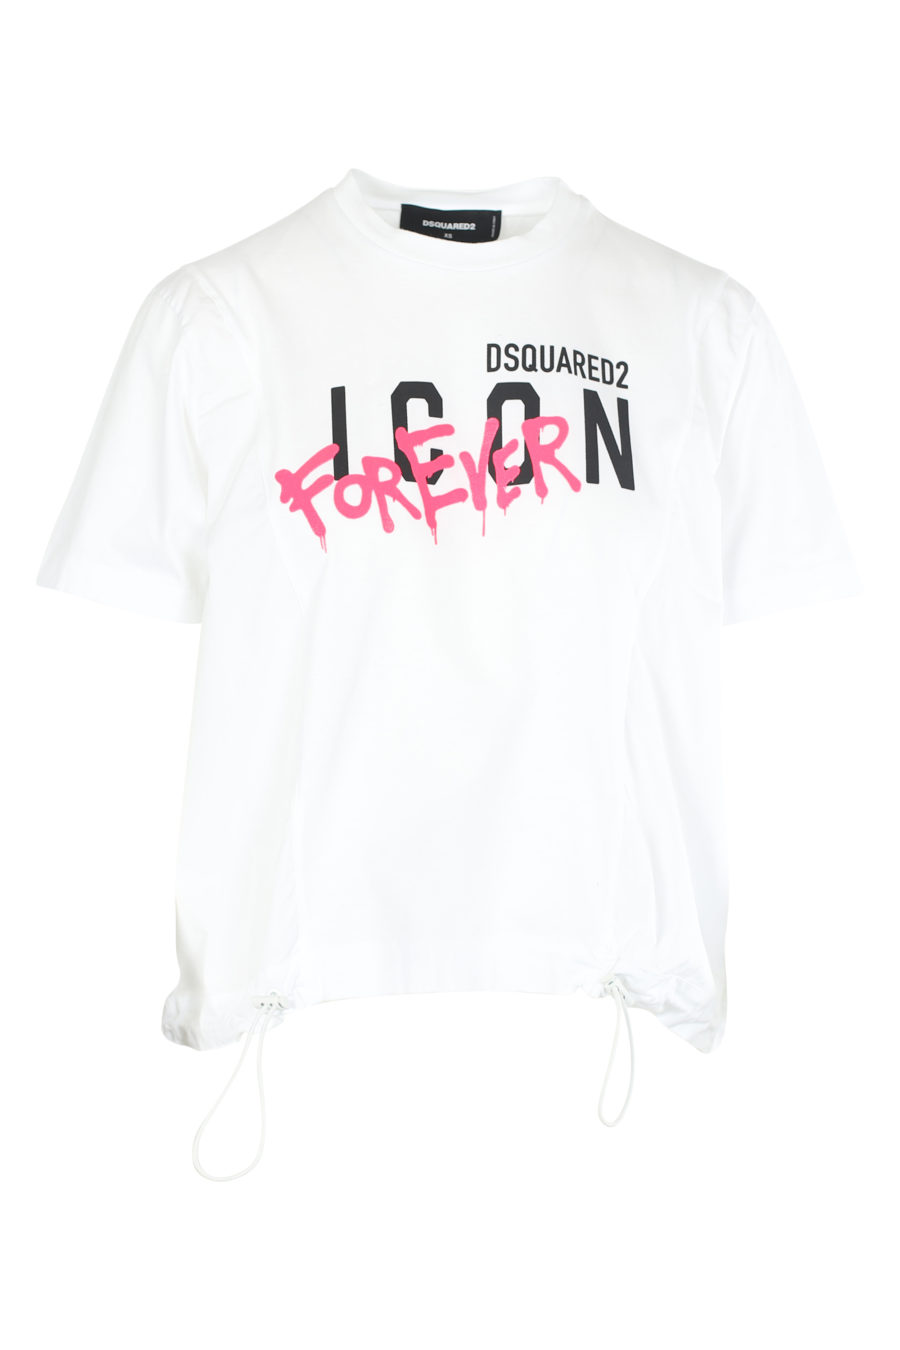 Camiseta blanca ajustable "Icon" graffiti - IMG 5459